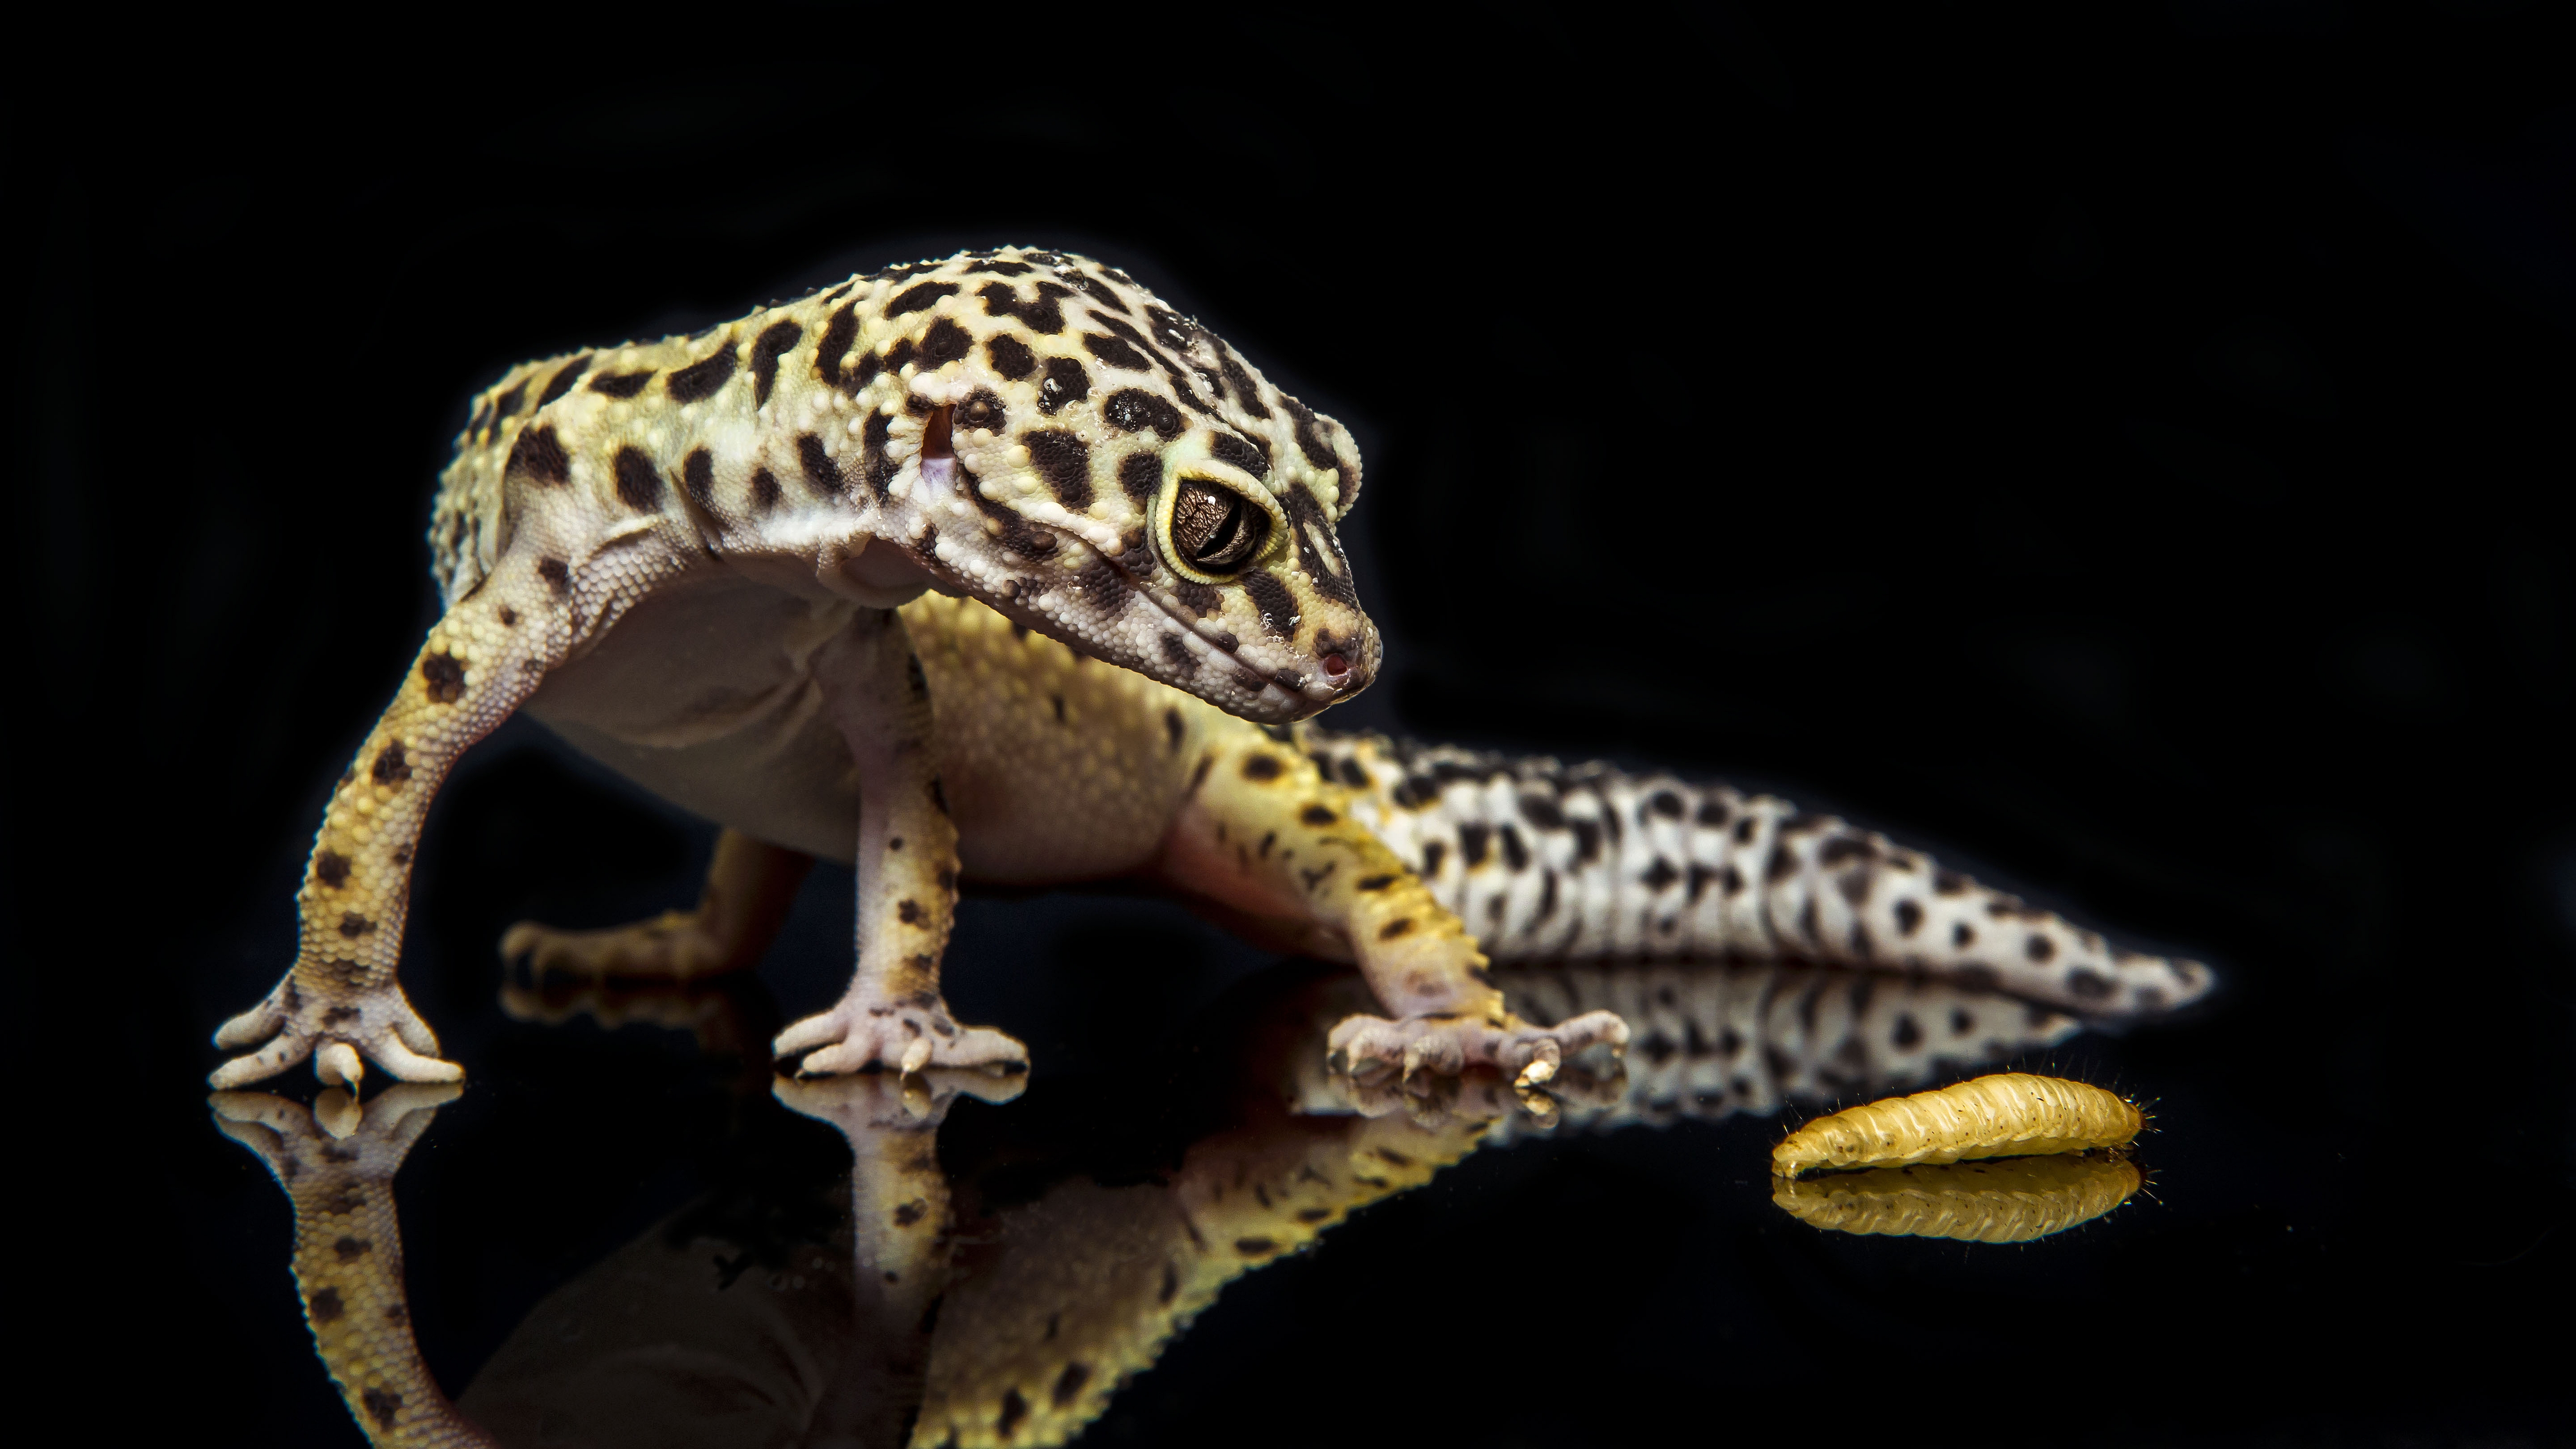 6 Leopard Gecko HD Wallpapers | Backgrounds - Wallpaper Abyss